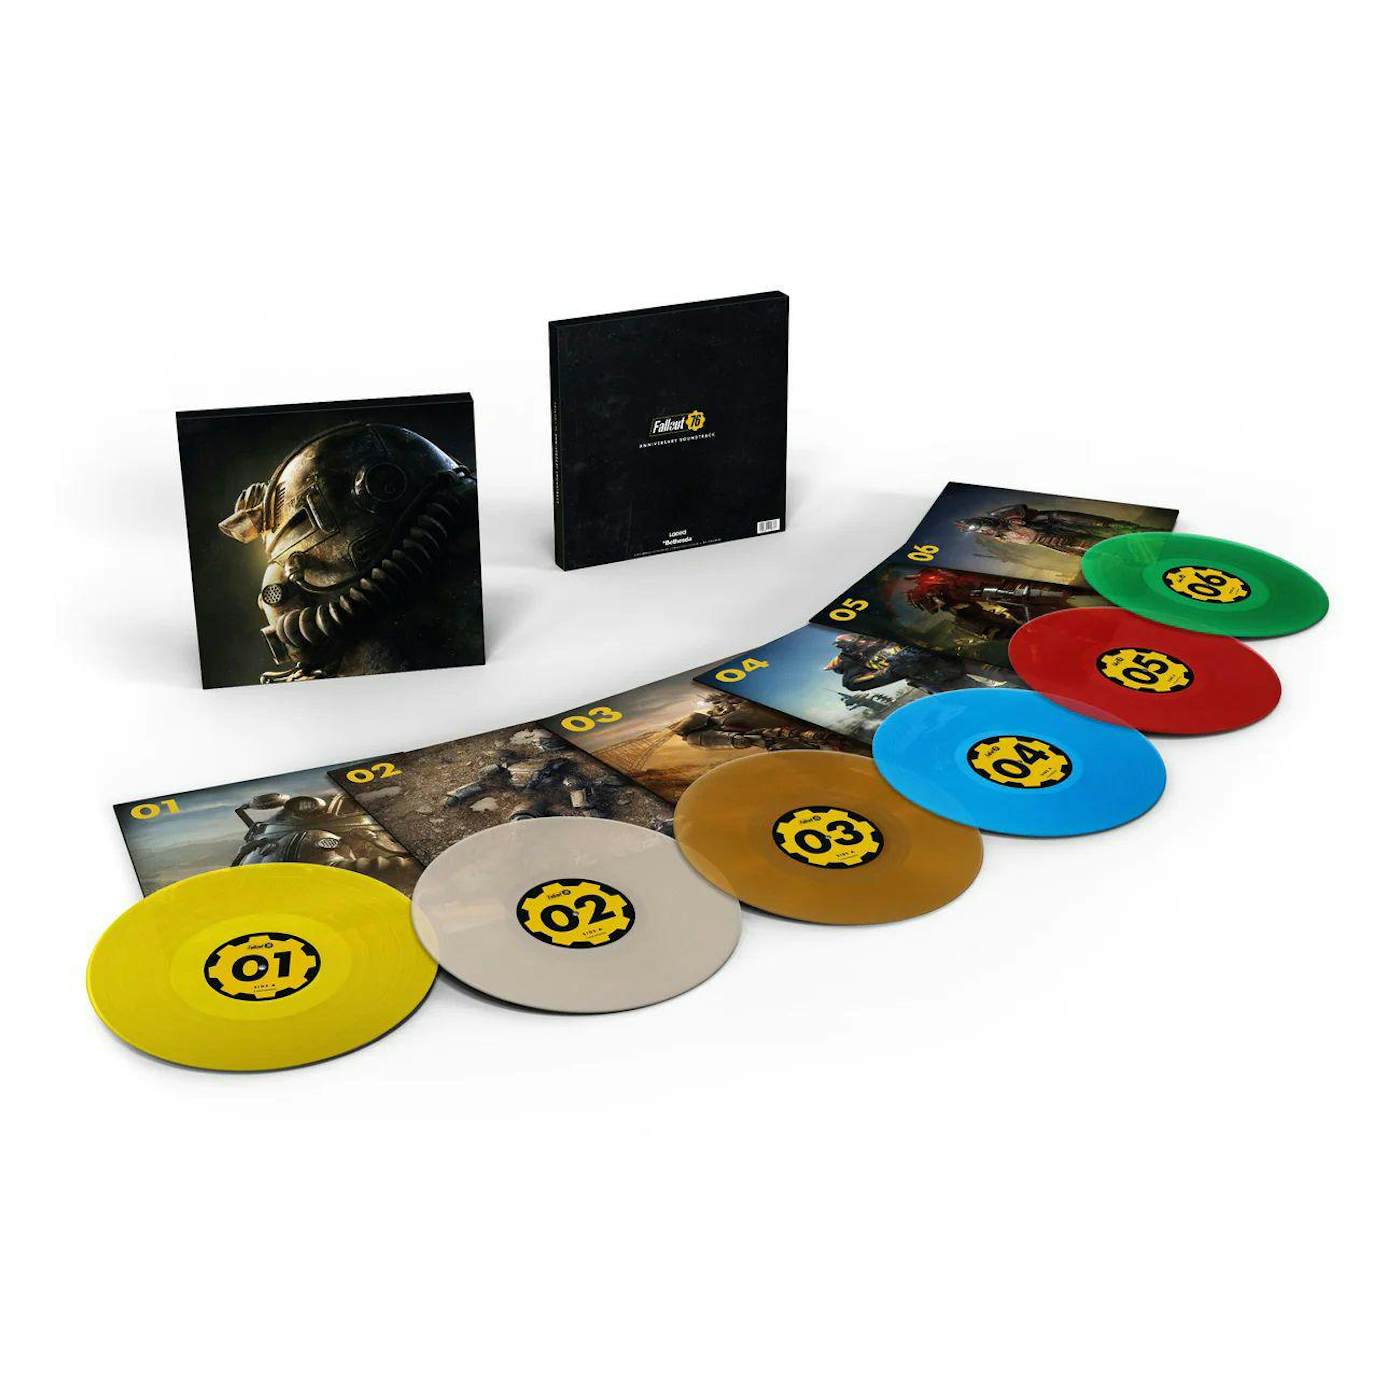 Fallout 4 original score gets gorgeous limited-edition vinyl set - Polygon